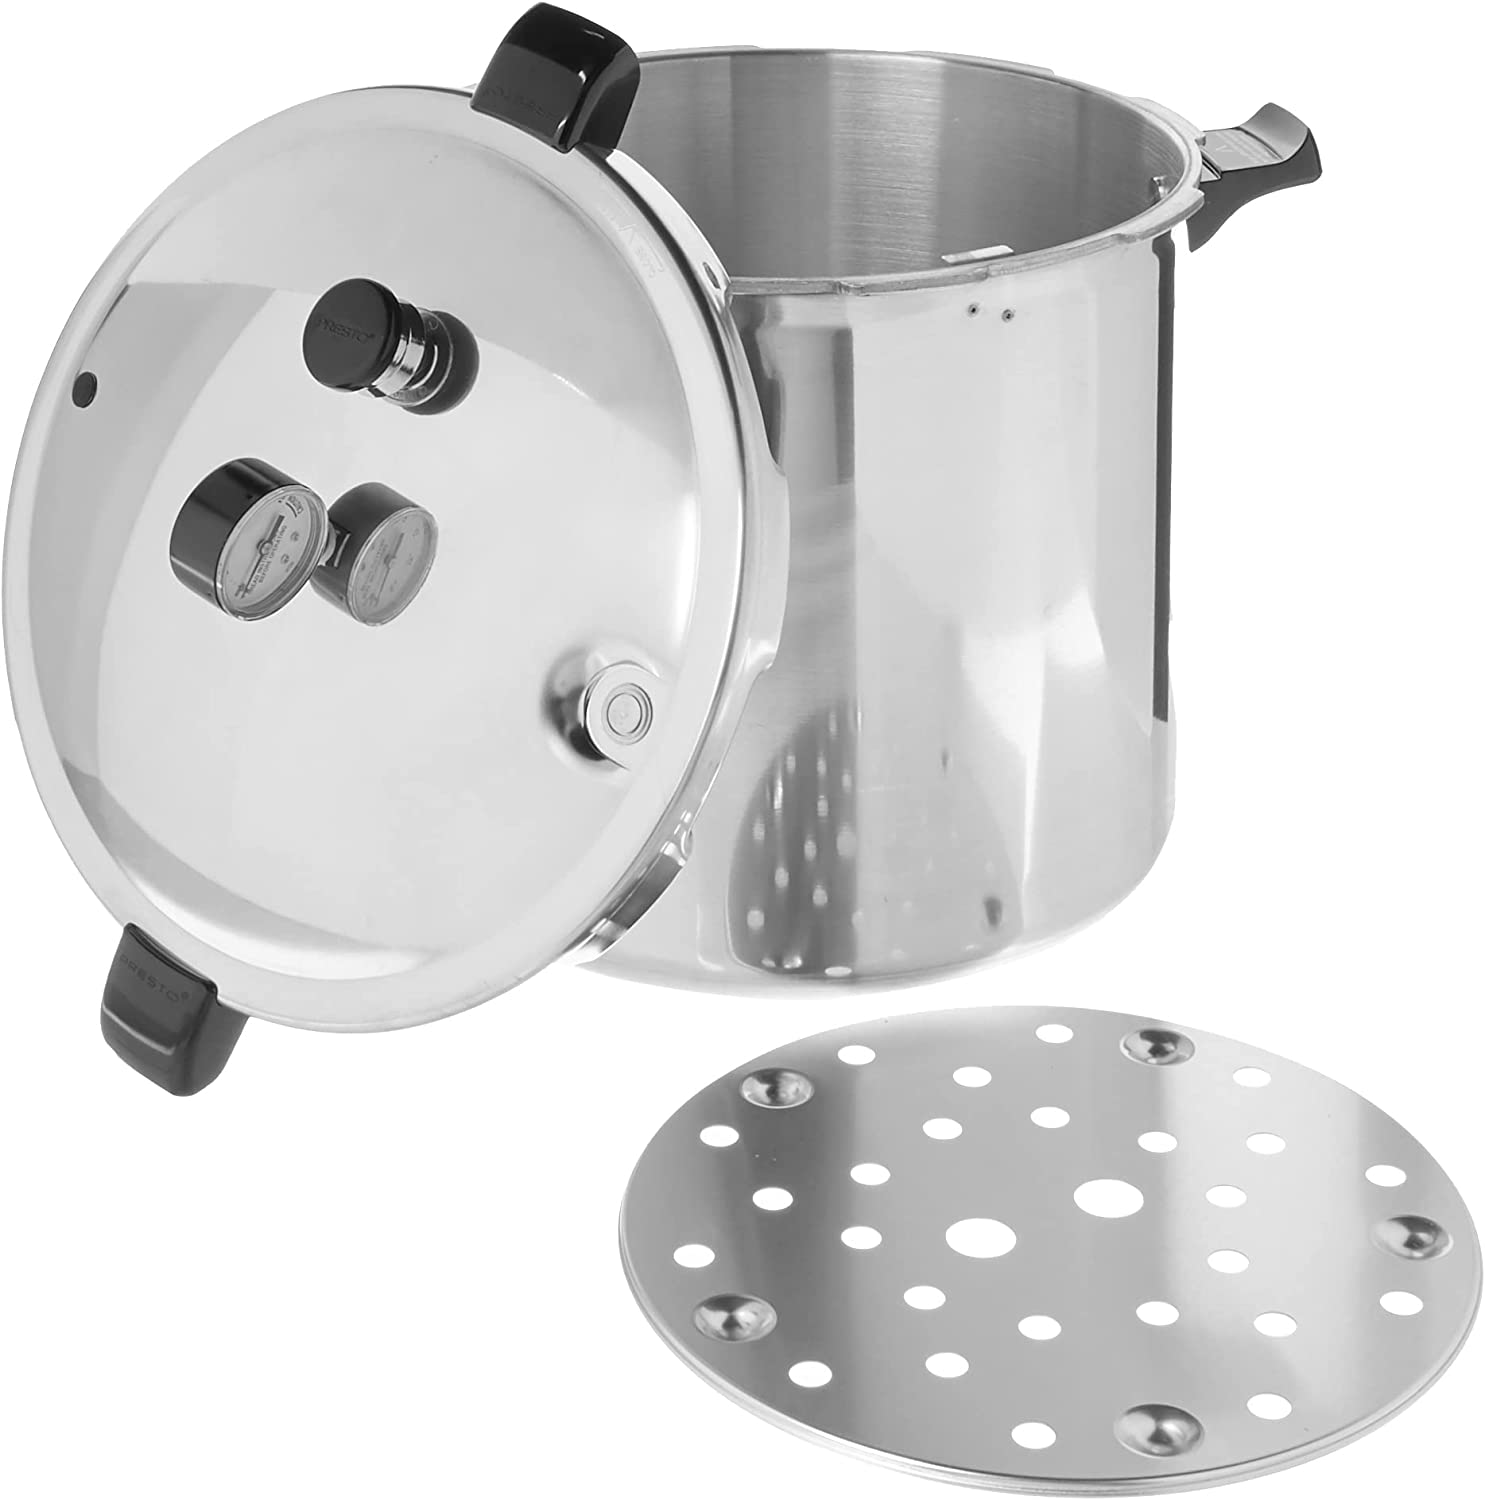  Presto 01781 Pressure Canner and Cooker, 23 qt, Silver: Home &  Kitchen